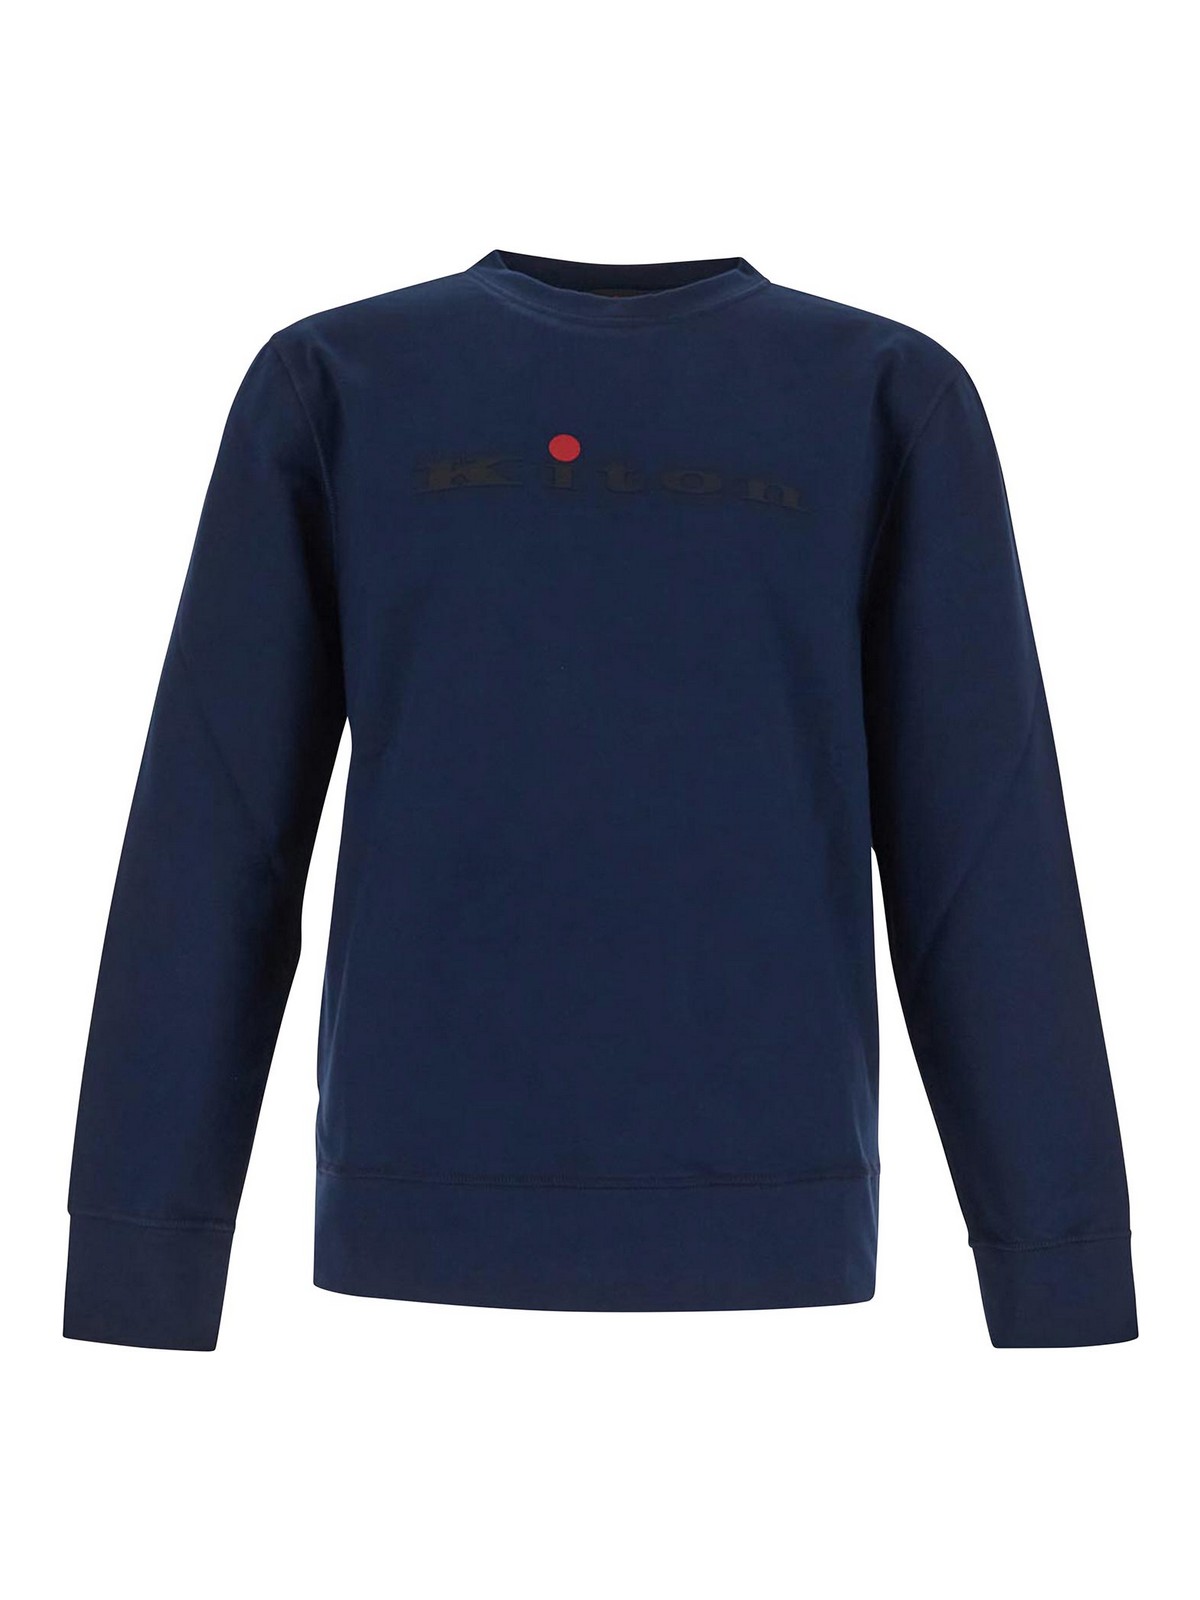 Kiton Sweatshirt In Navy Blue With Logo Print